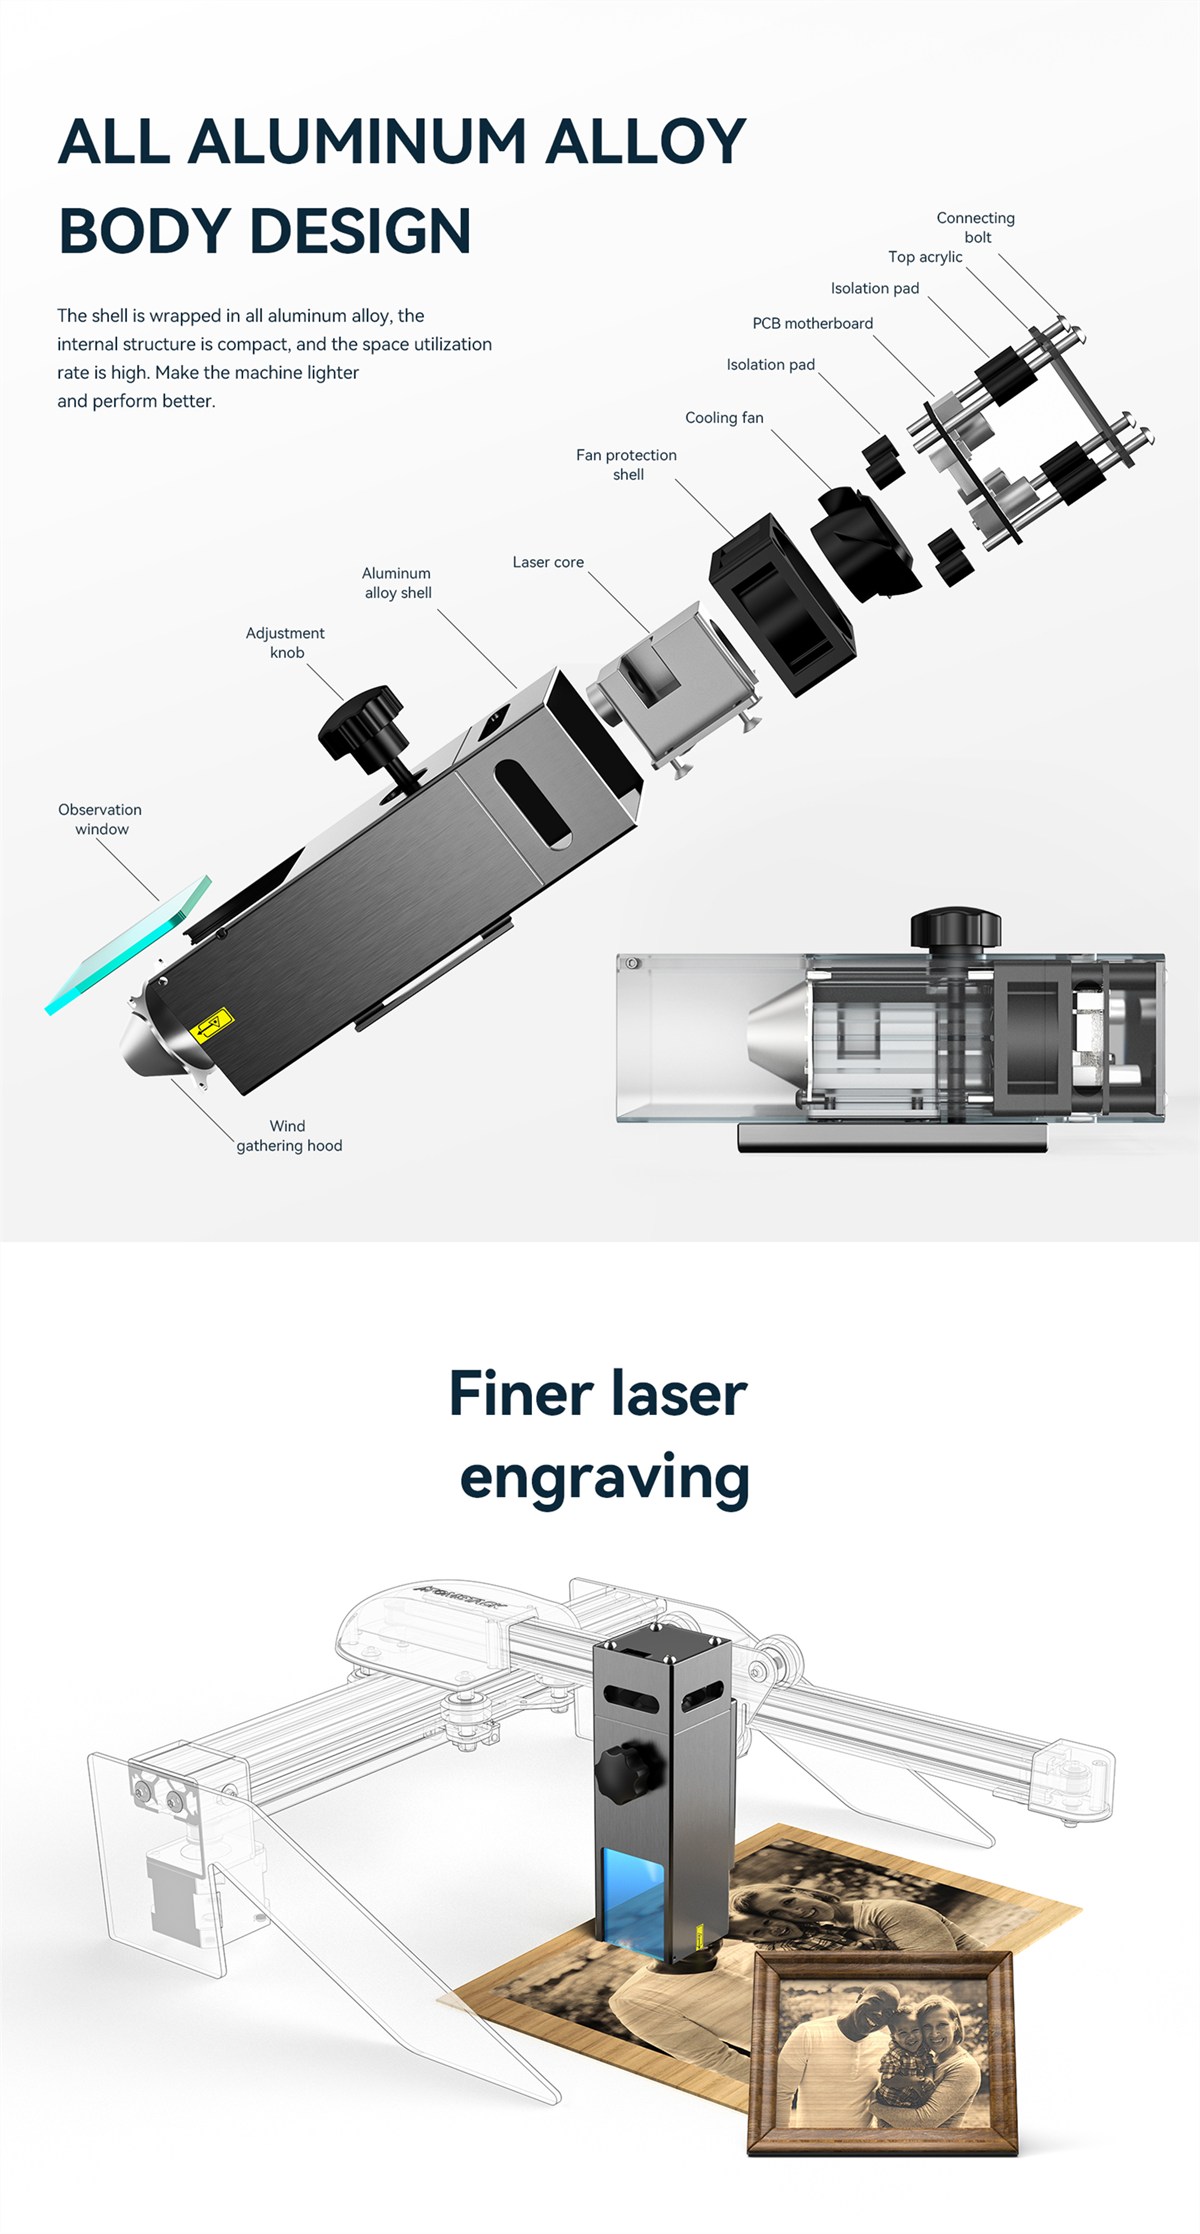 New ATOMSTACK M50 Double Ultra-Fine Compressed Spot Laser Module Upgraded Fixed-focus Laser Engraving Cutting Module For Laser Engraver Machine 3D Printer CNC Milling DIY Laser